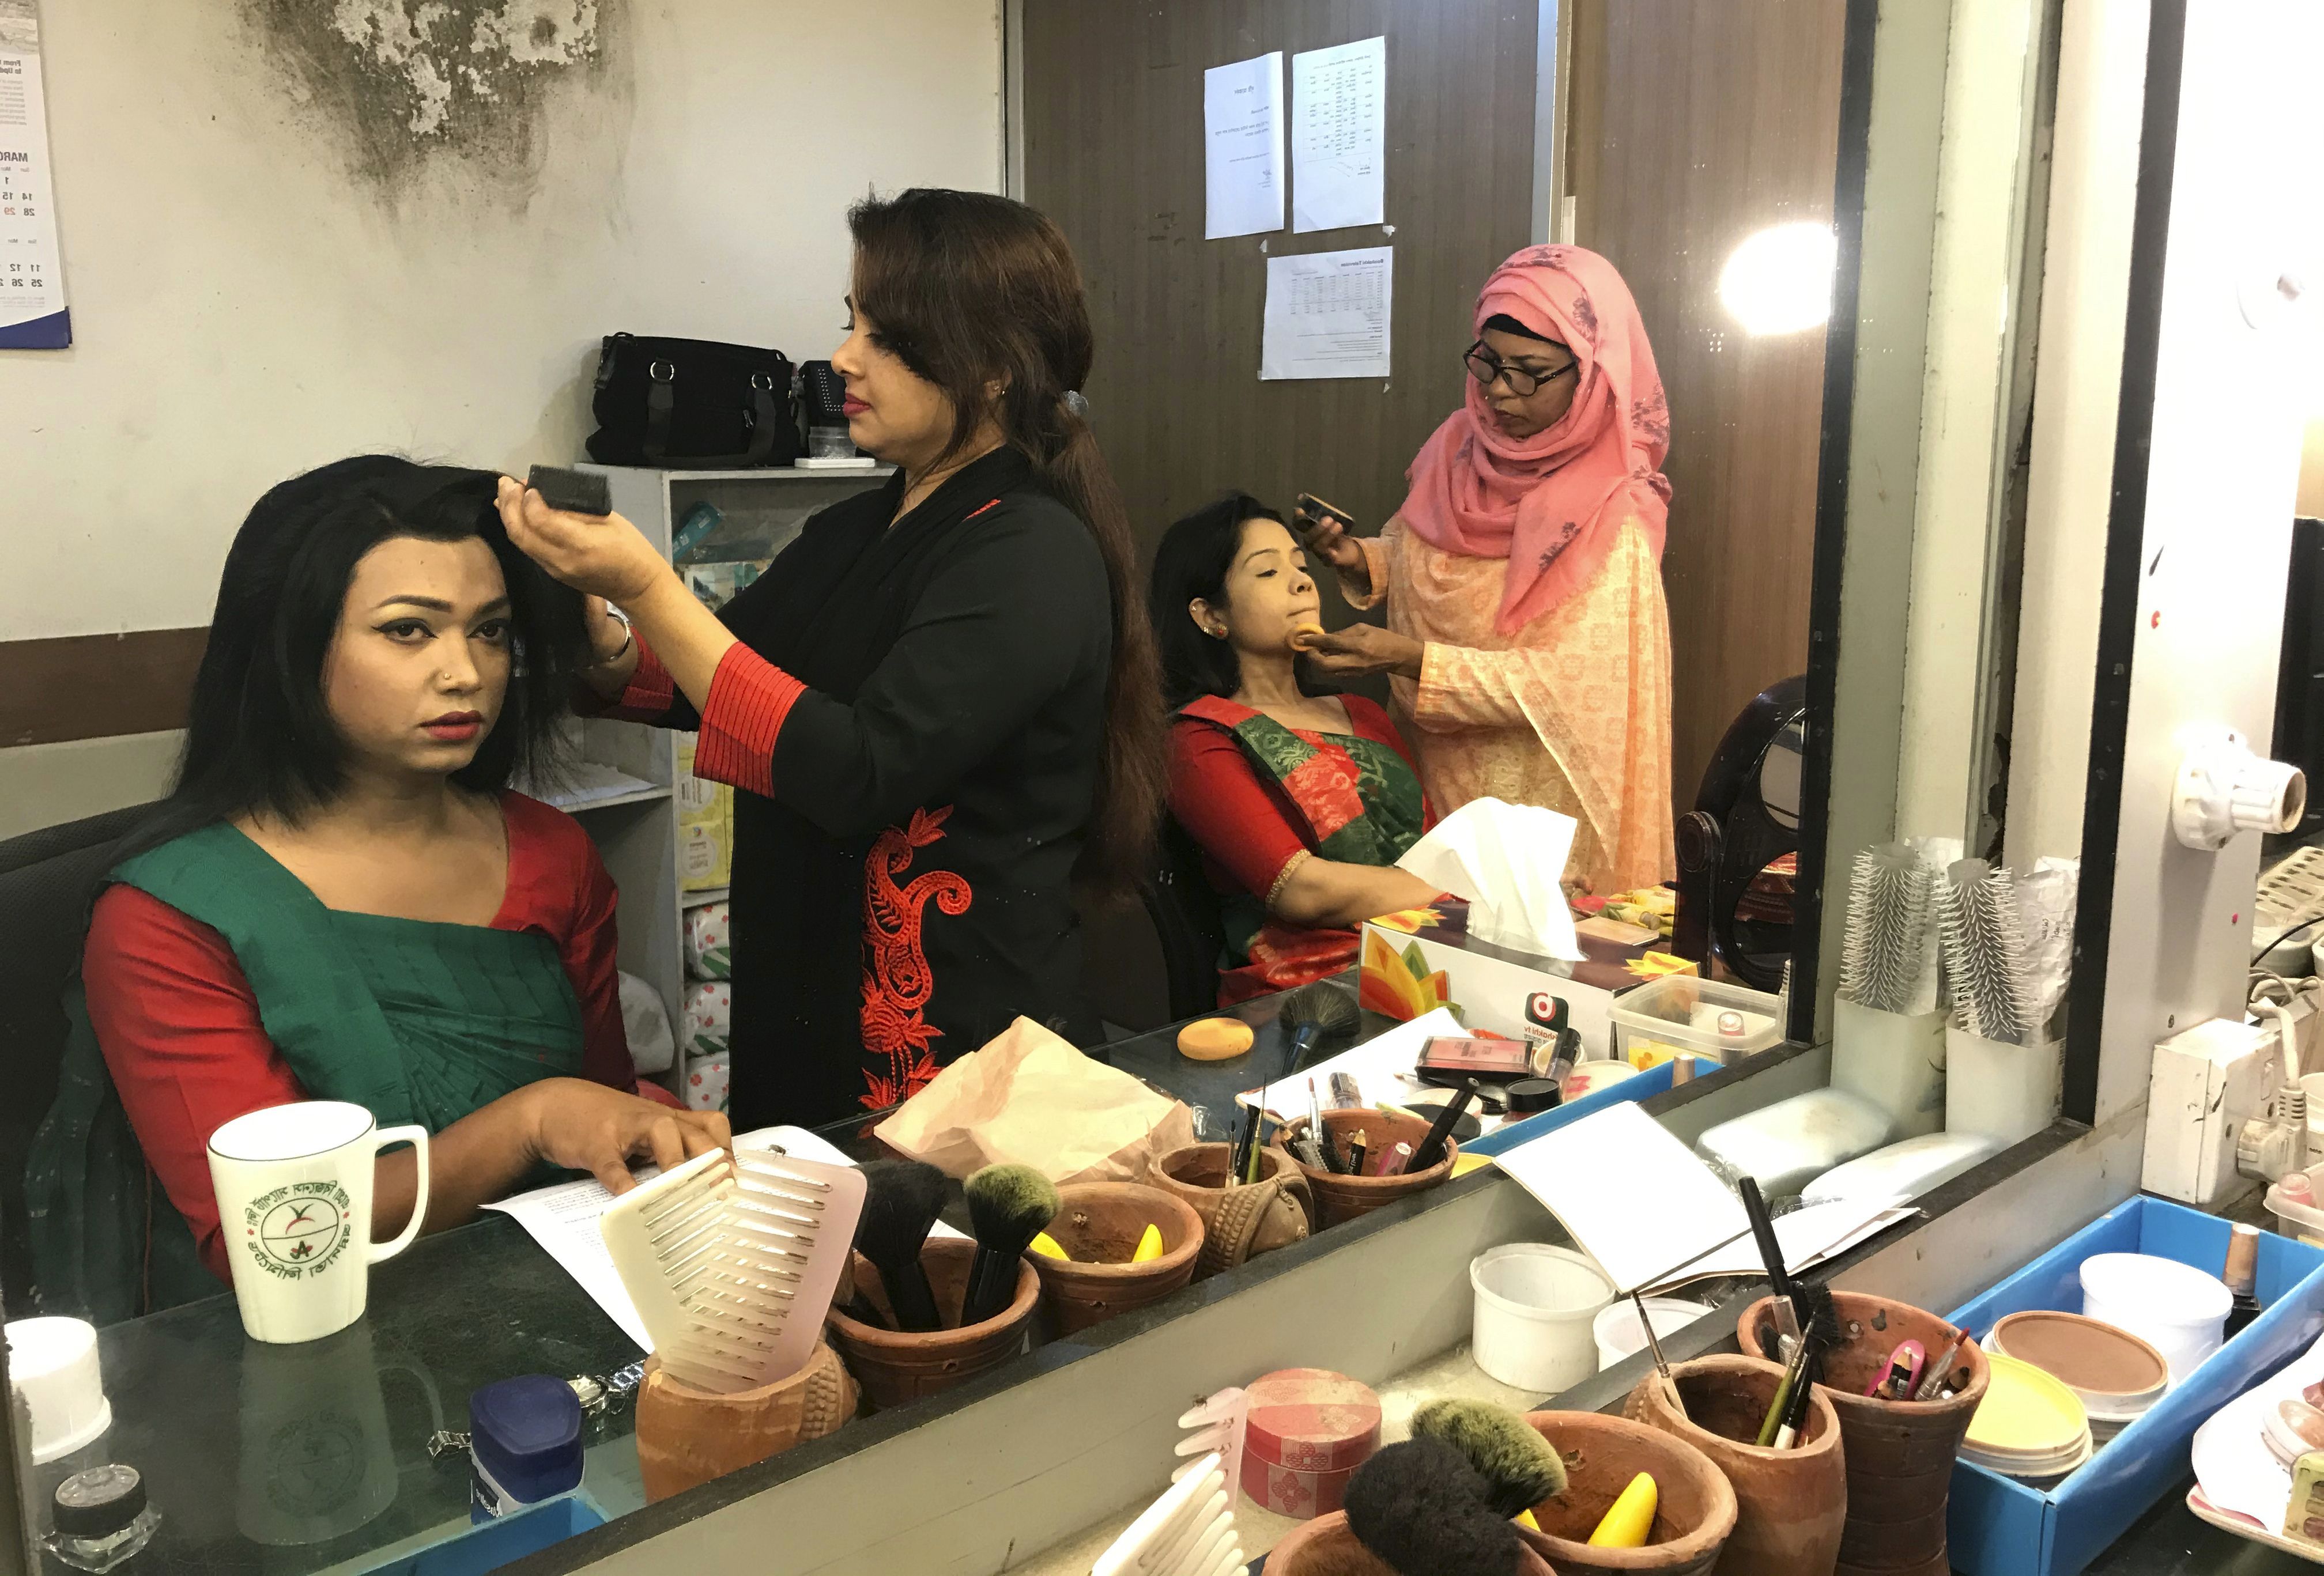 Bangladesh TV hires country’s 1st transgender news anchor